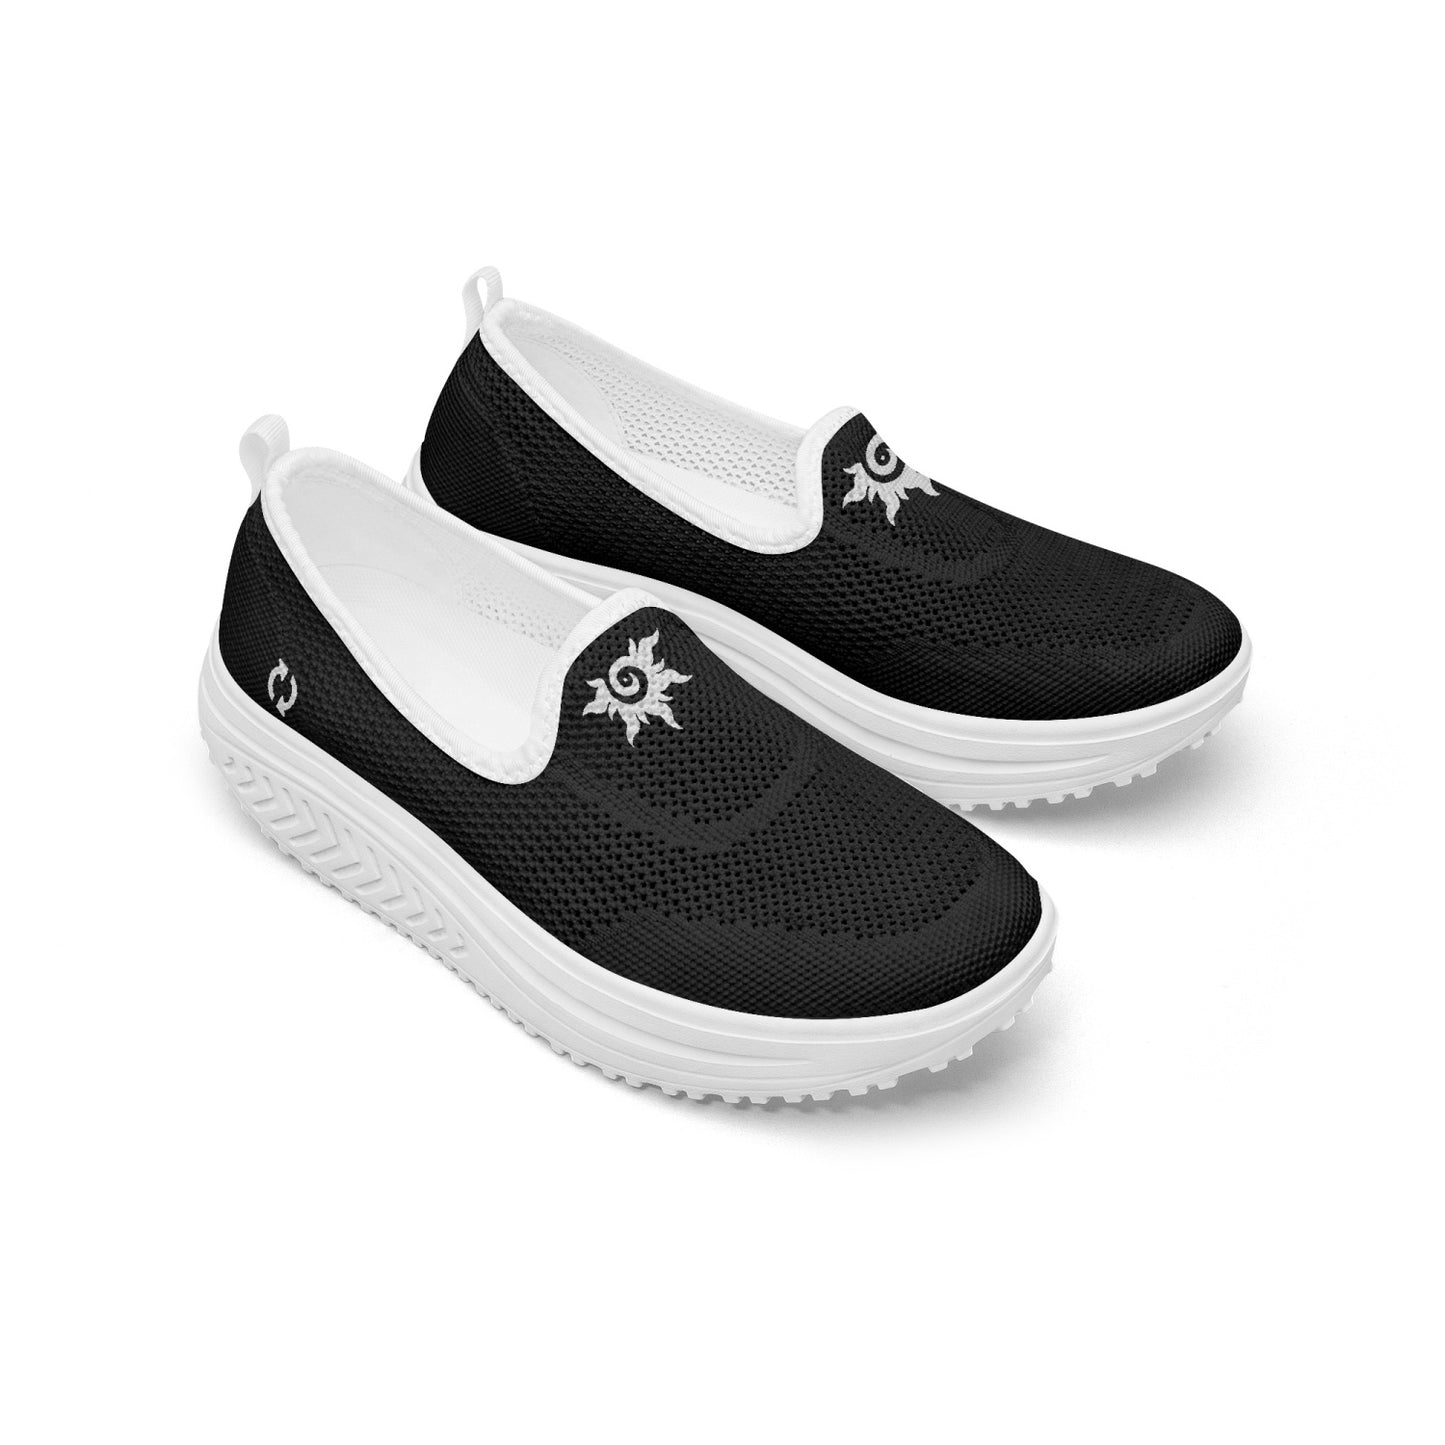 Women's Slip-On Mesh Rocking Shoes - Black